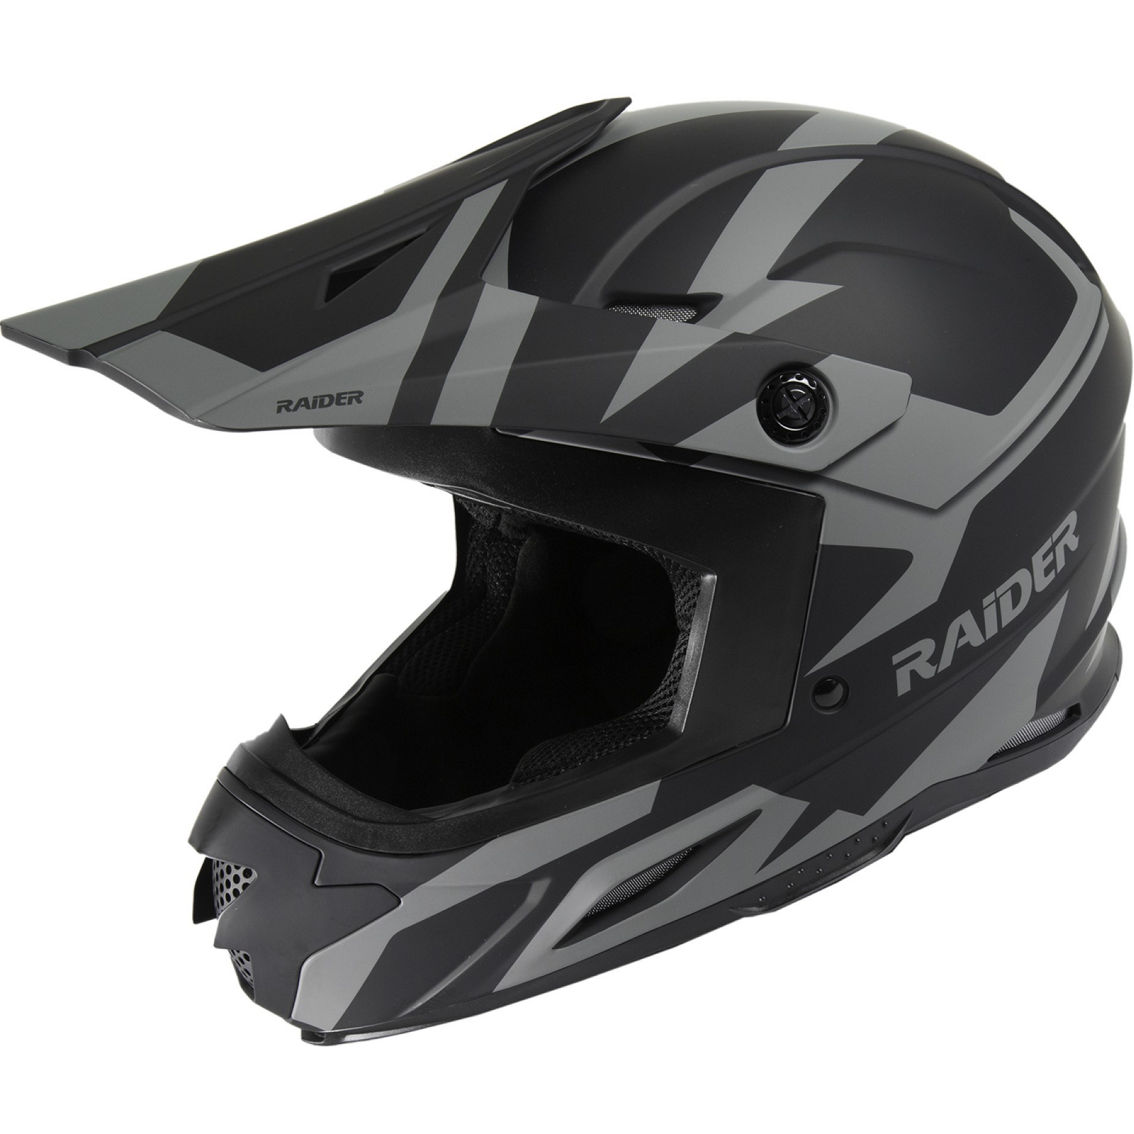 Raider Z7 MX Helmet - Image 4 of 6